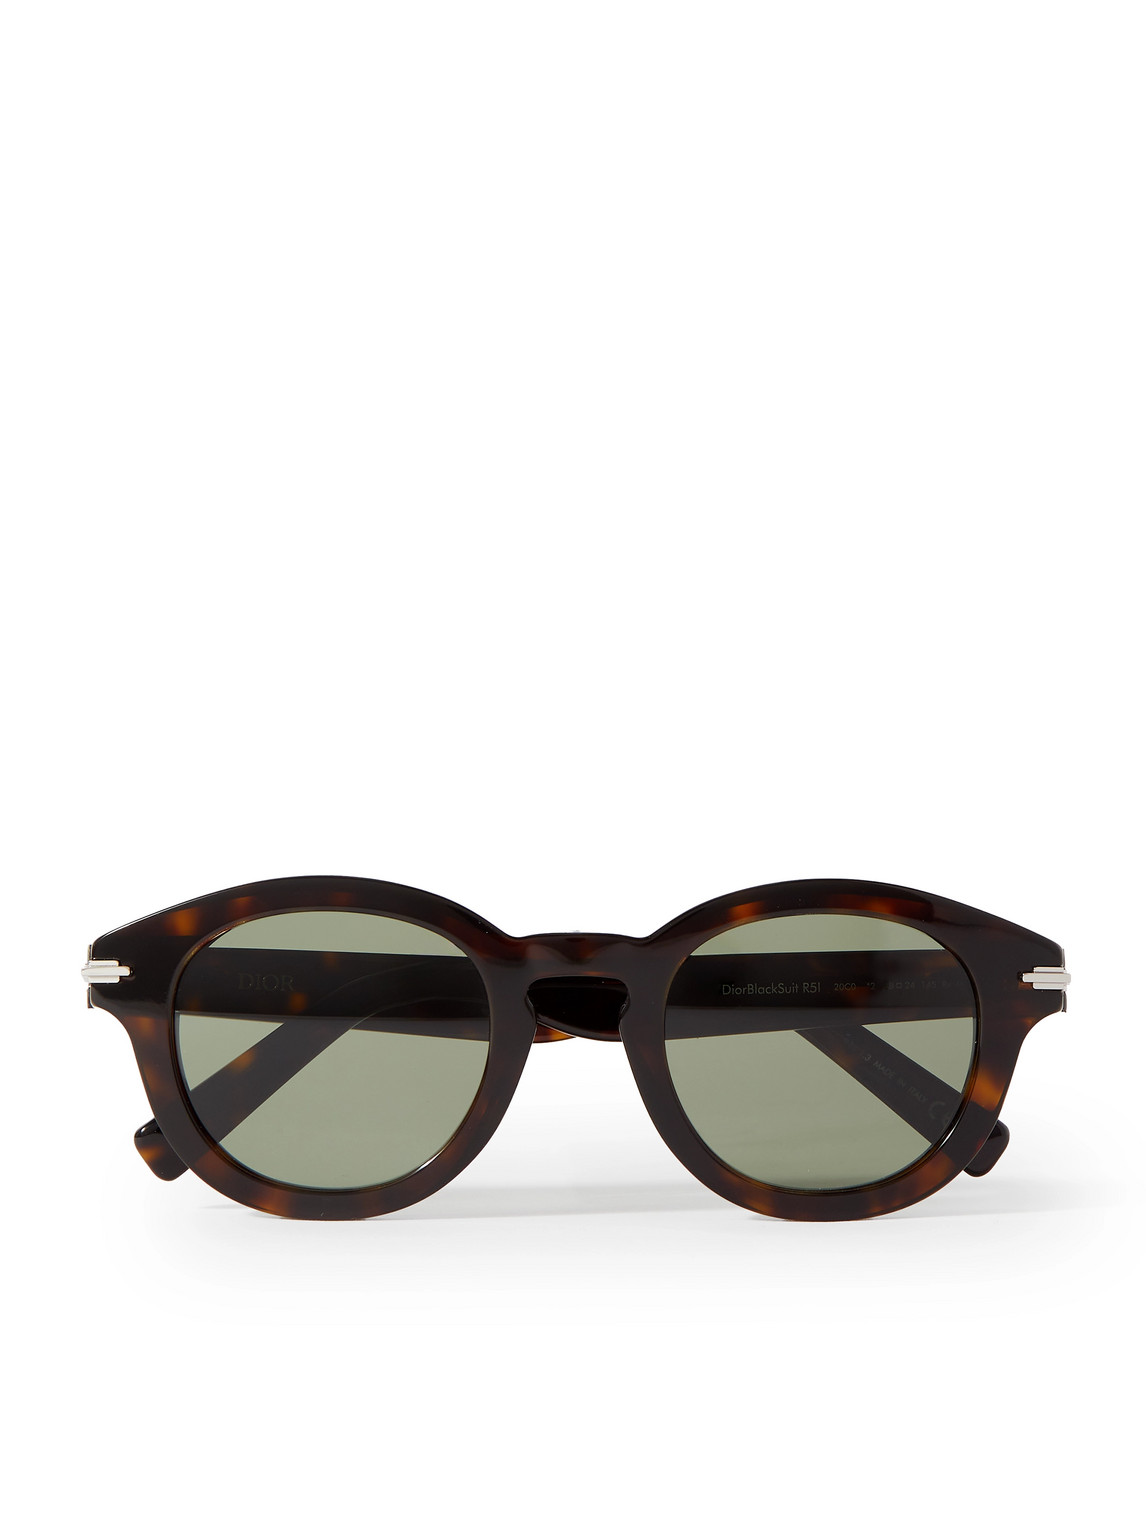 Dior Eyewear - DiorBlackSuit R5I Round-Frame Acetate Sunglasses - Men - Tortoiseshell von Dior Eyewear